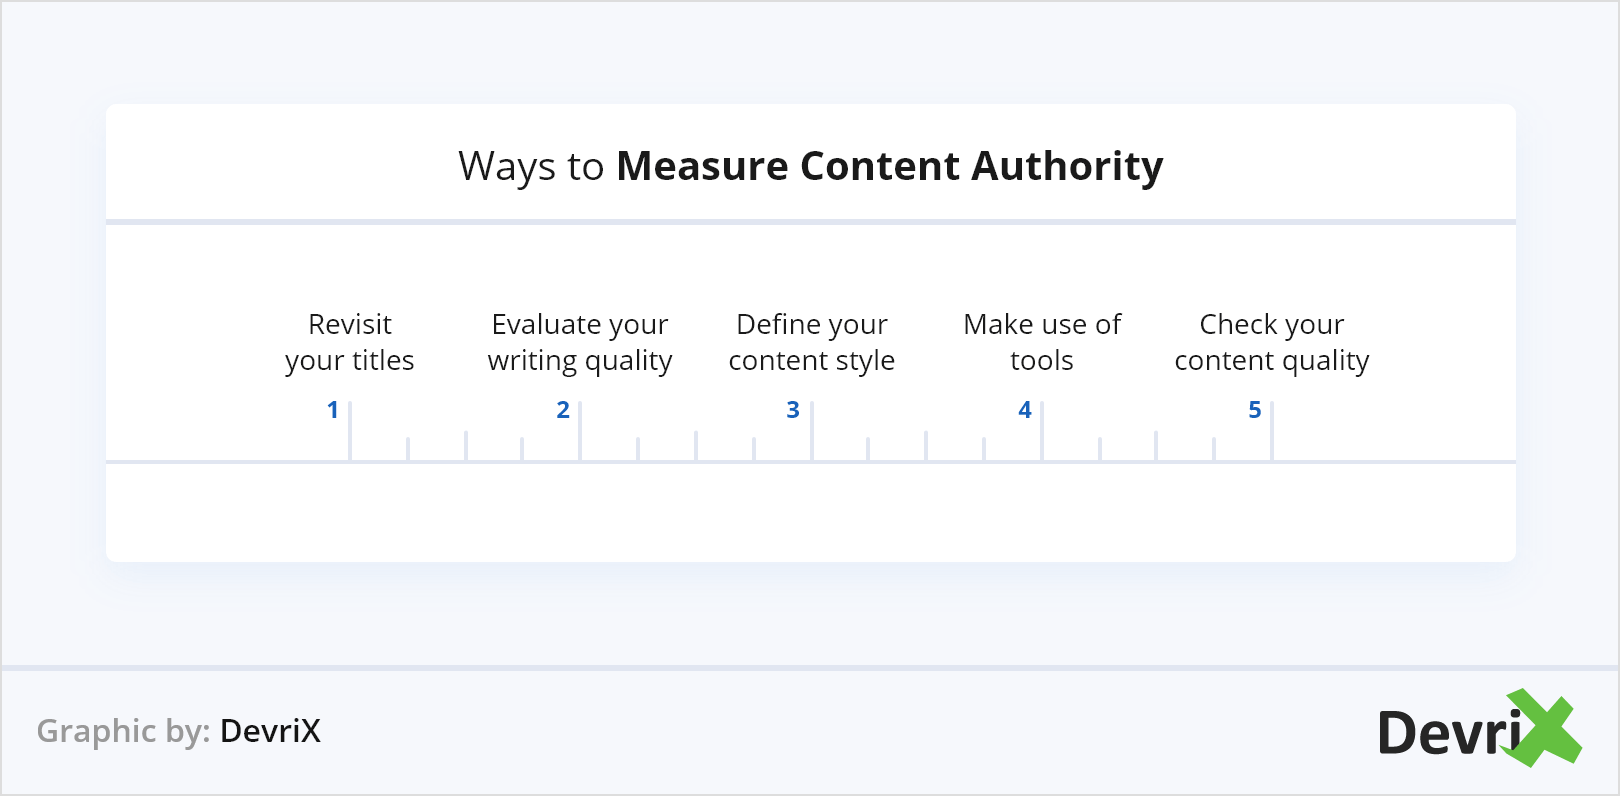 Ways to Measure Content Authority@2x